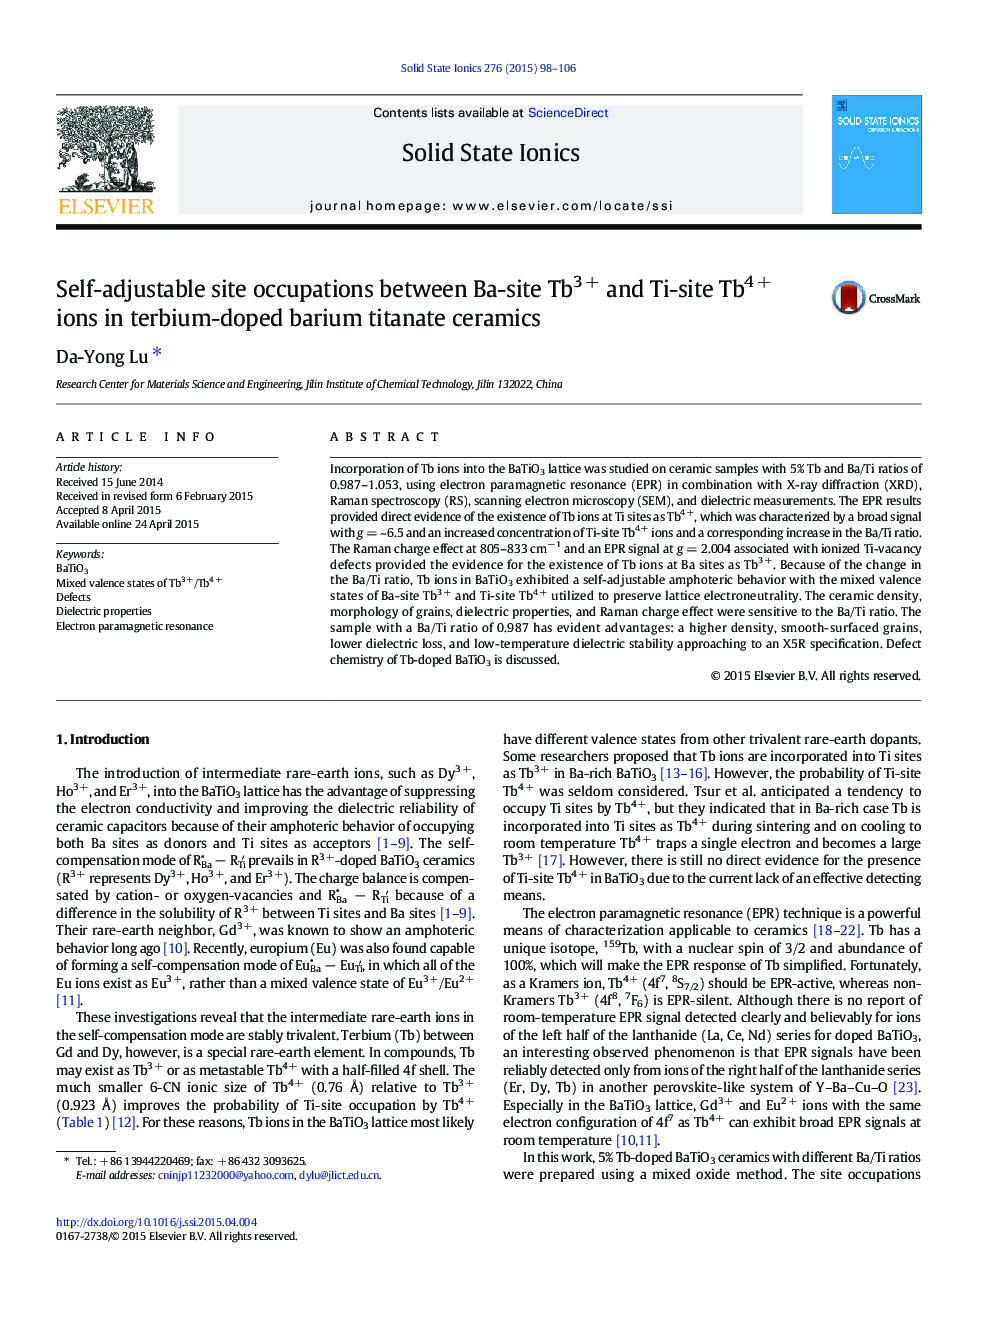 Self-adjustable site occupations between Ba-site Tb3 + and Ti-site Tb4 + ions in terbium-doped barium titanate ceramics